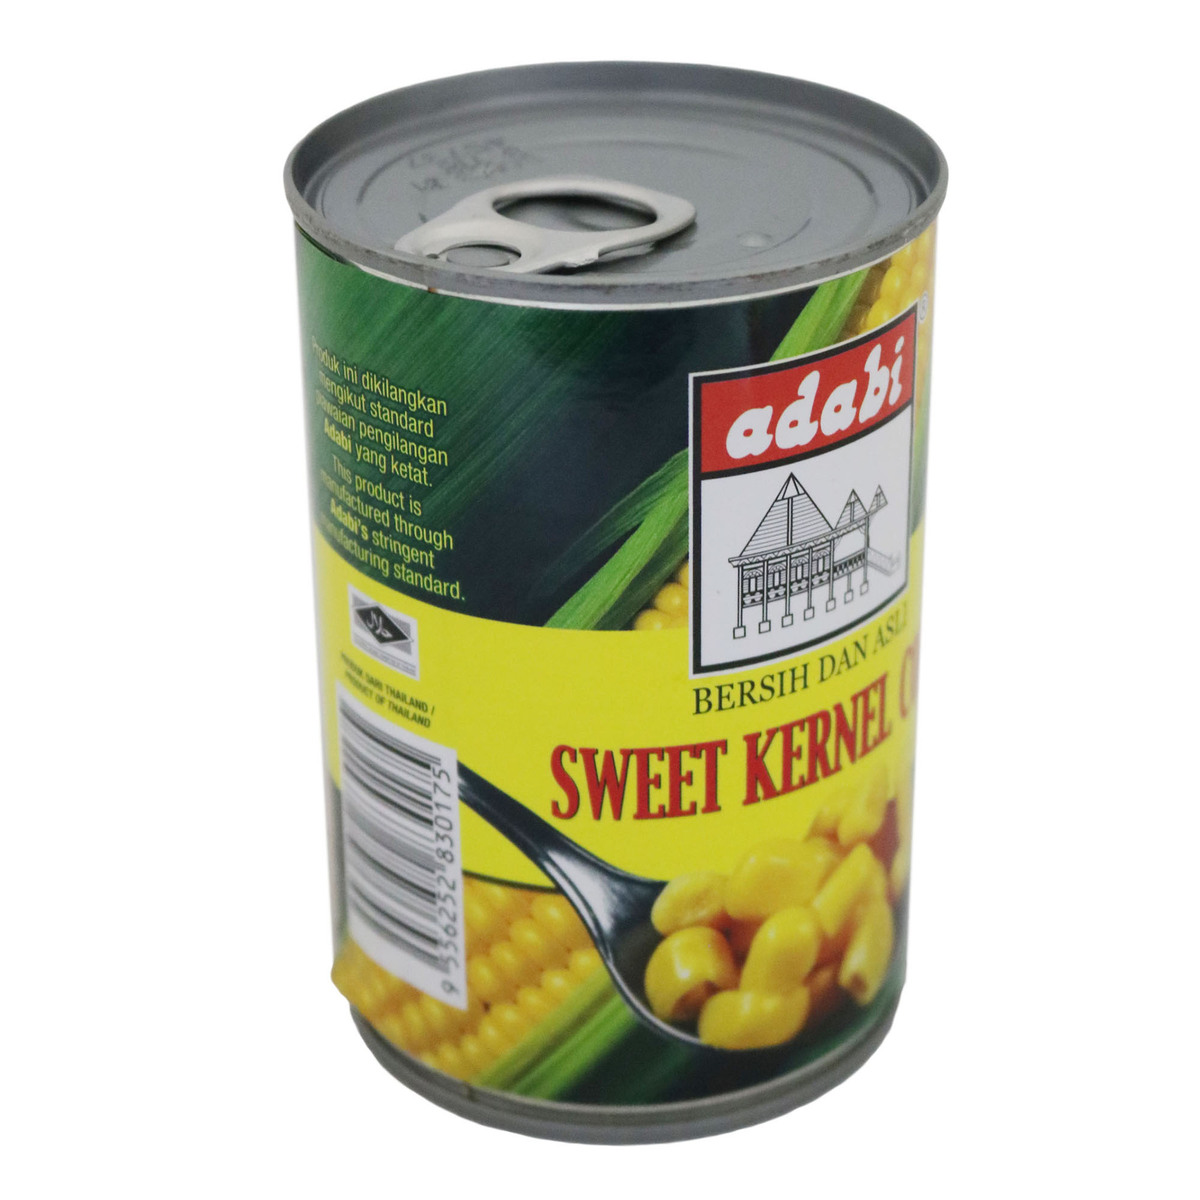 Adabi Jagung Sweet Kernel Corn 425g